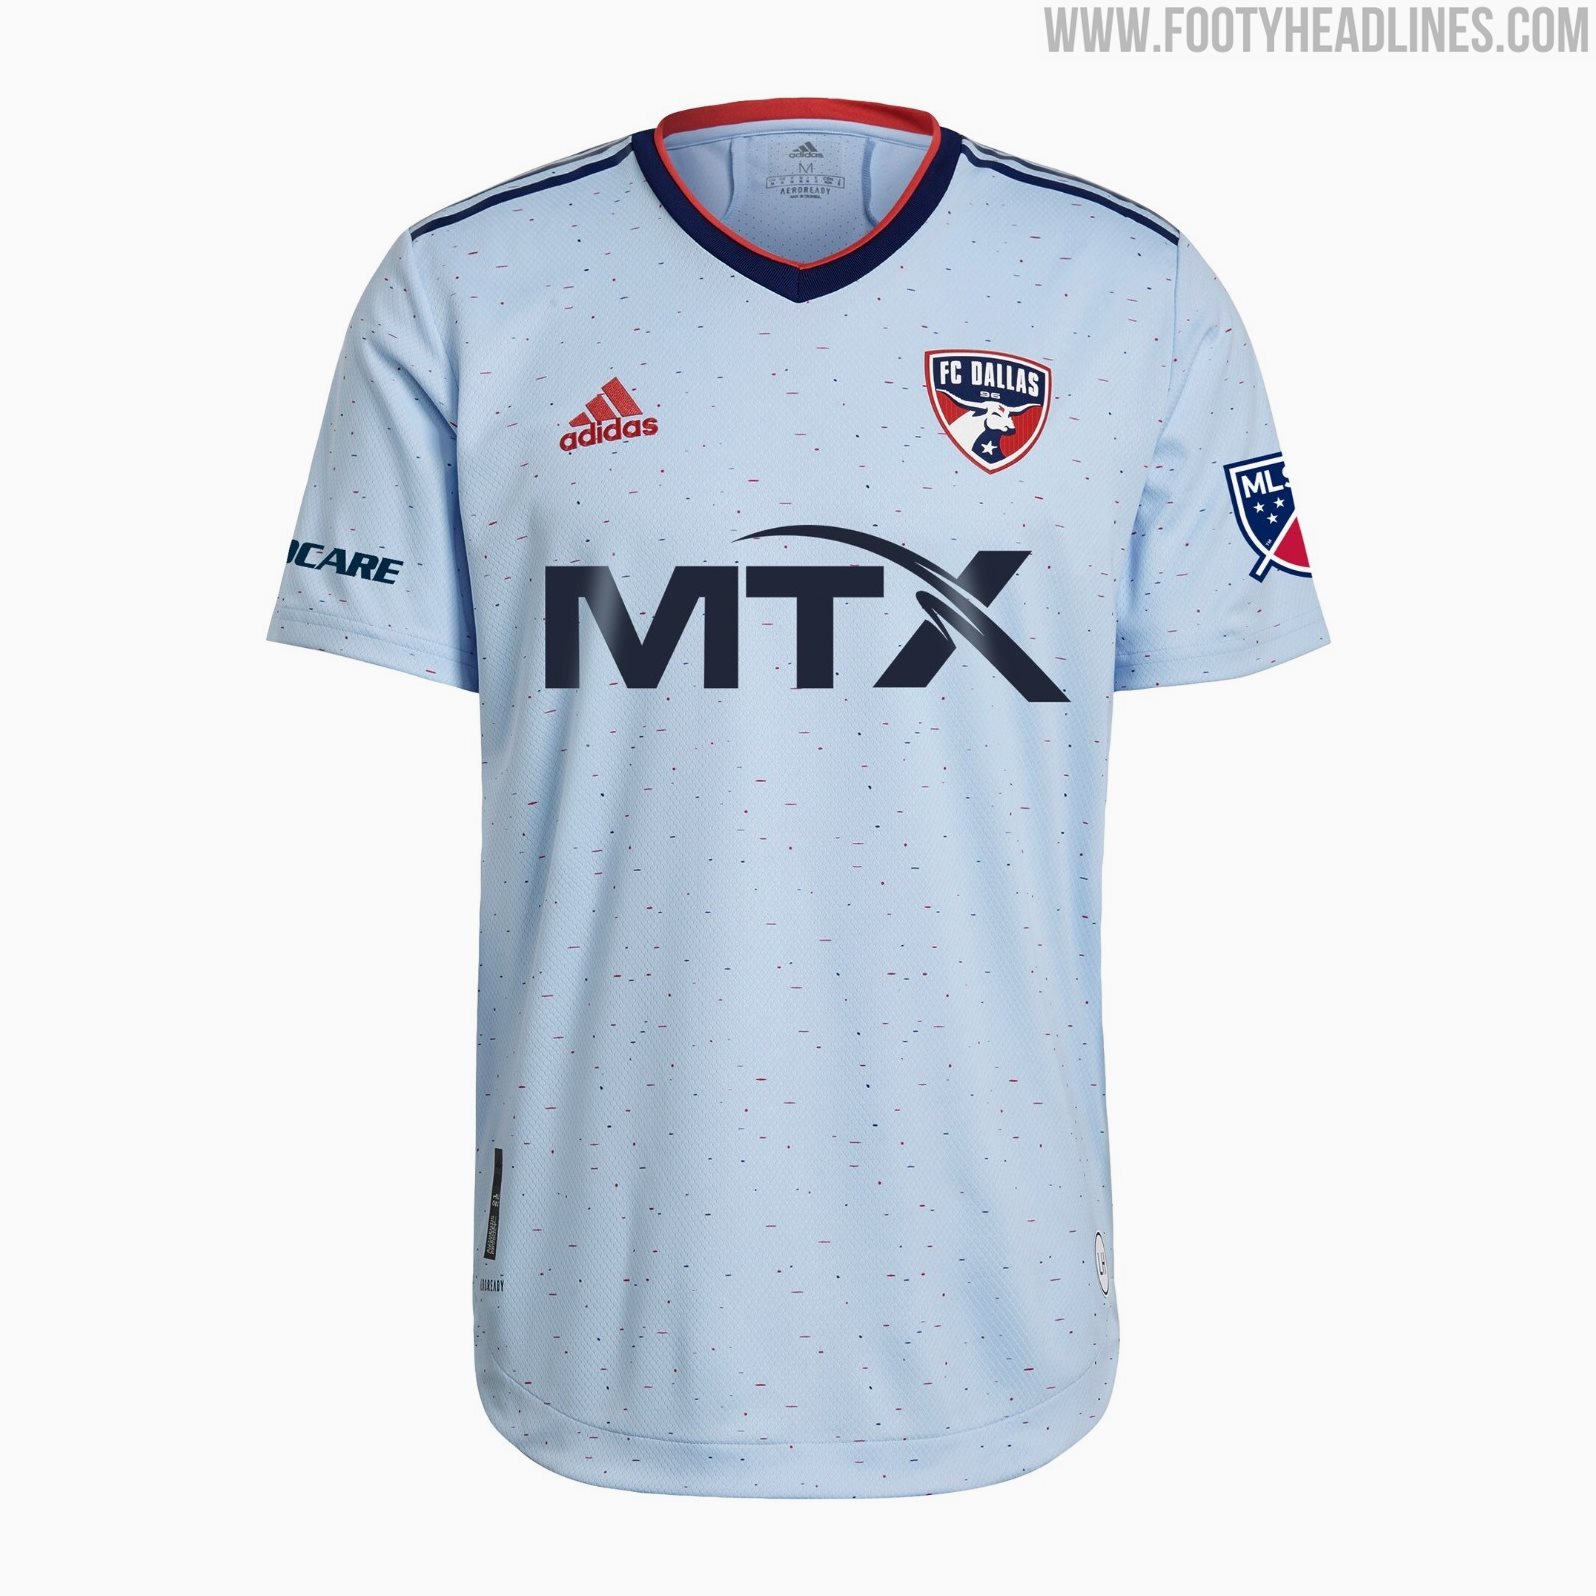 FC Dallas 2023 Away Kit Released - Tribute to Dallas Burn - Footy